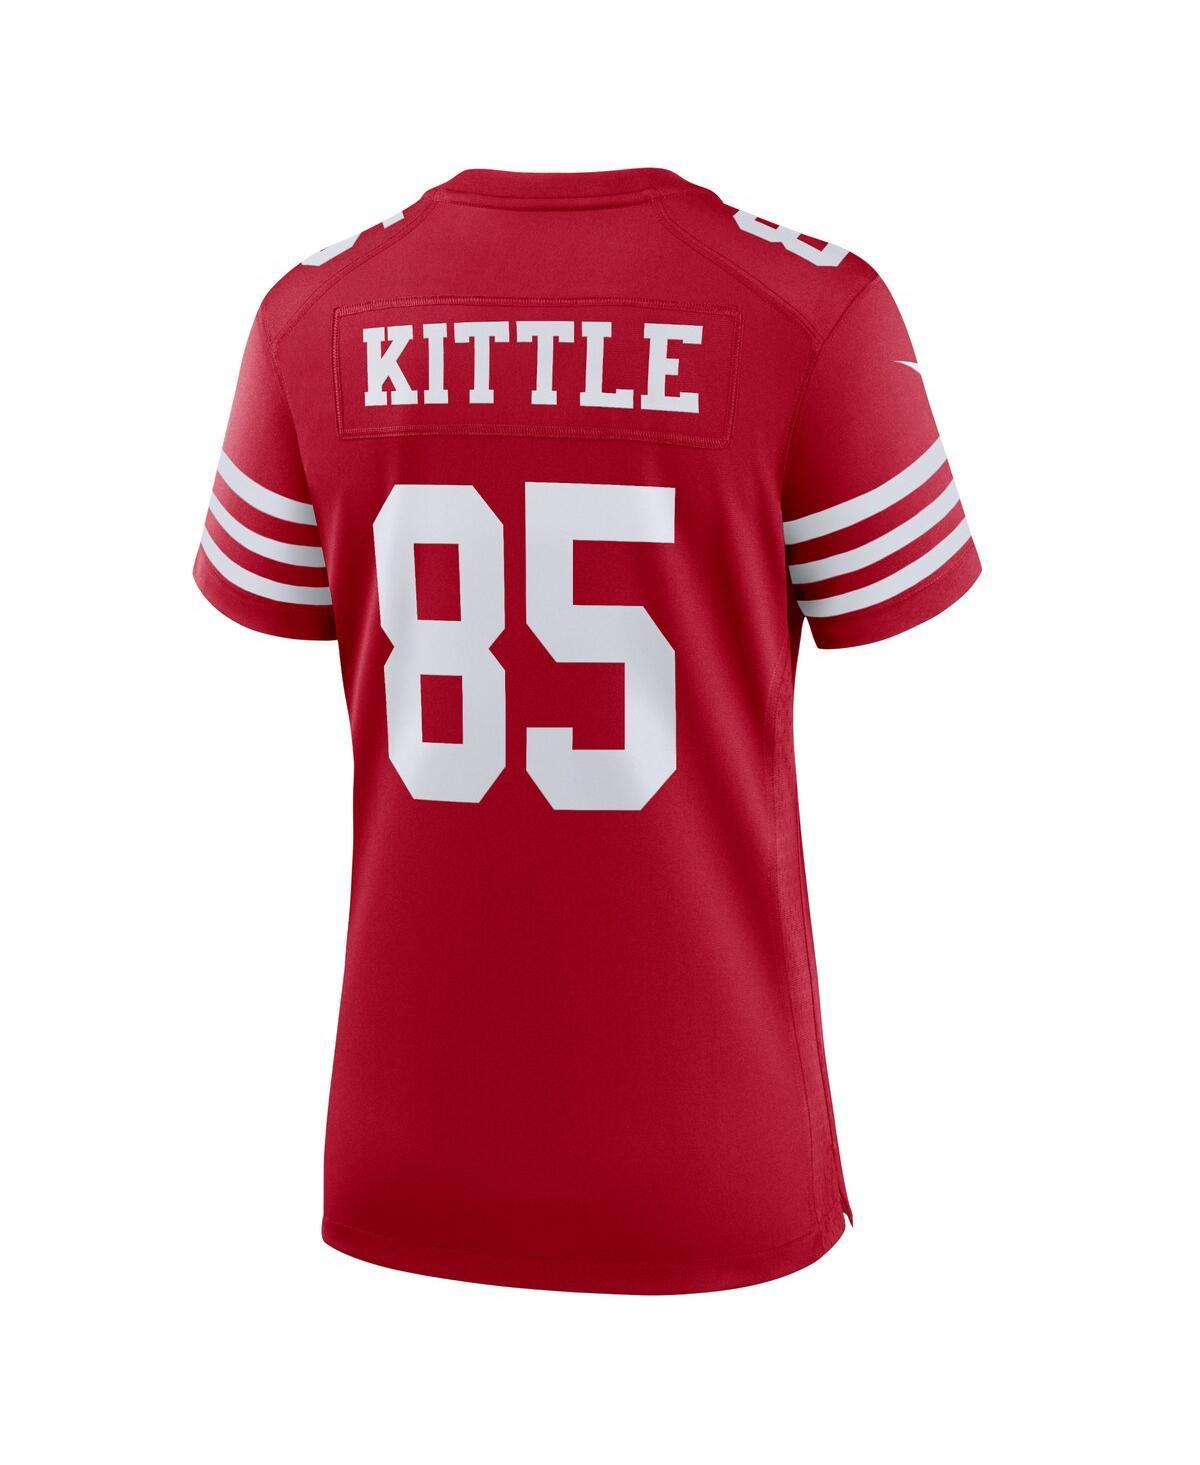 George Kittle 85 San Francisco 49ers Women's Atmosphere Fashion